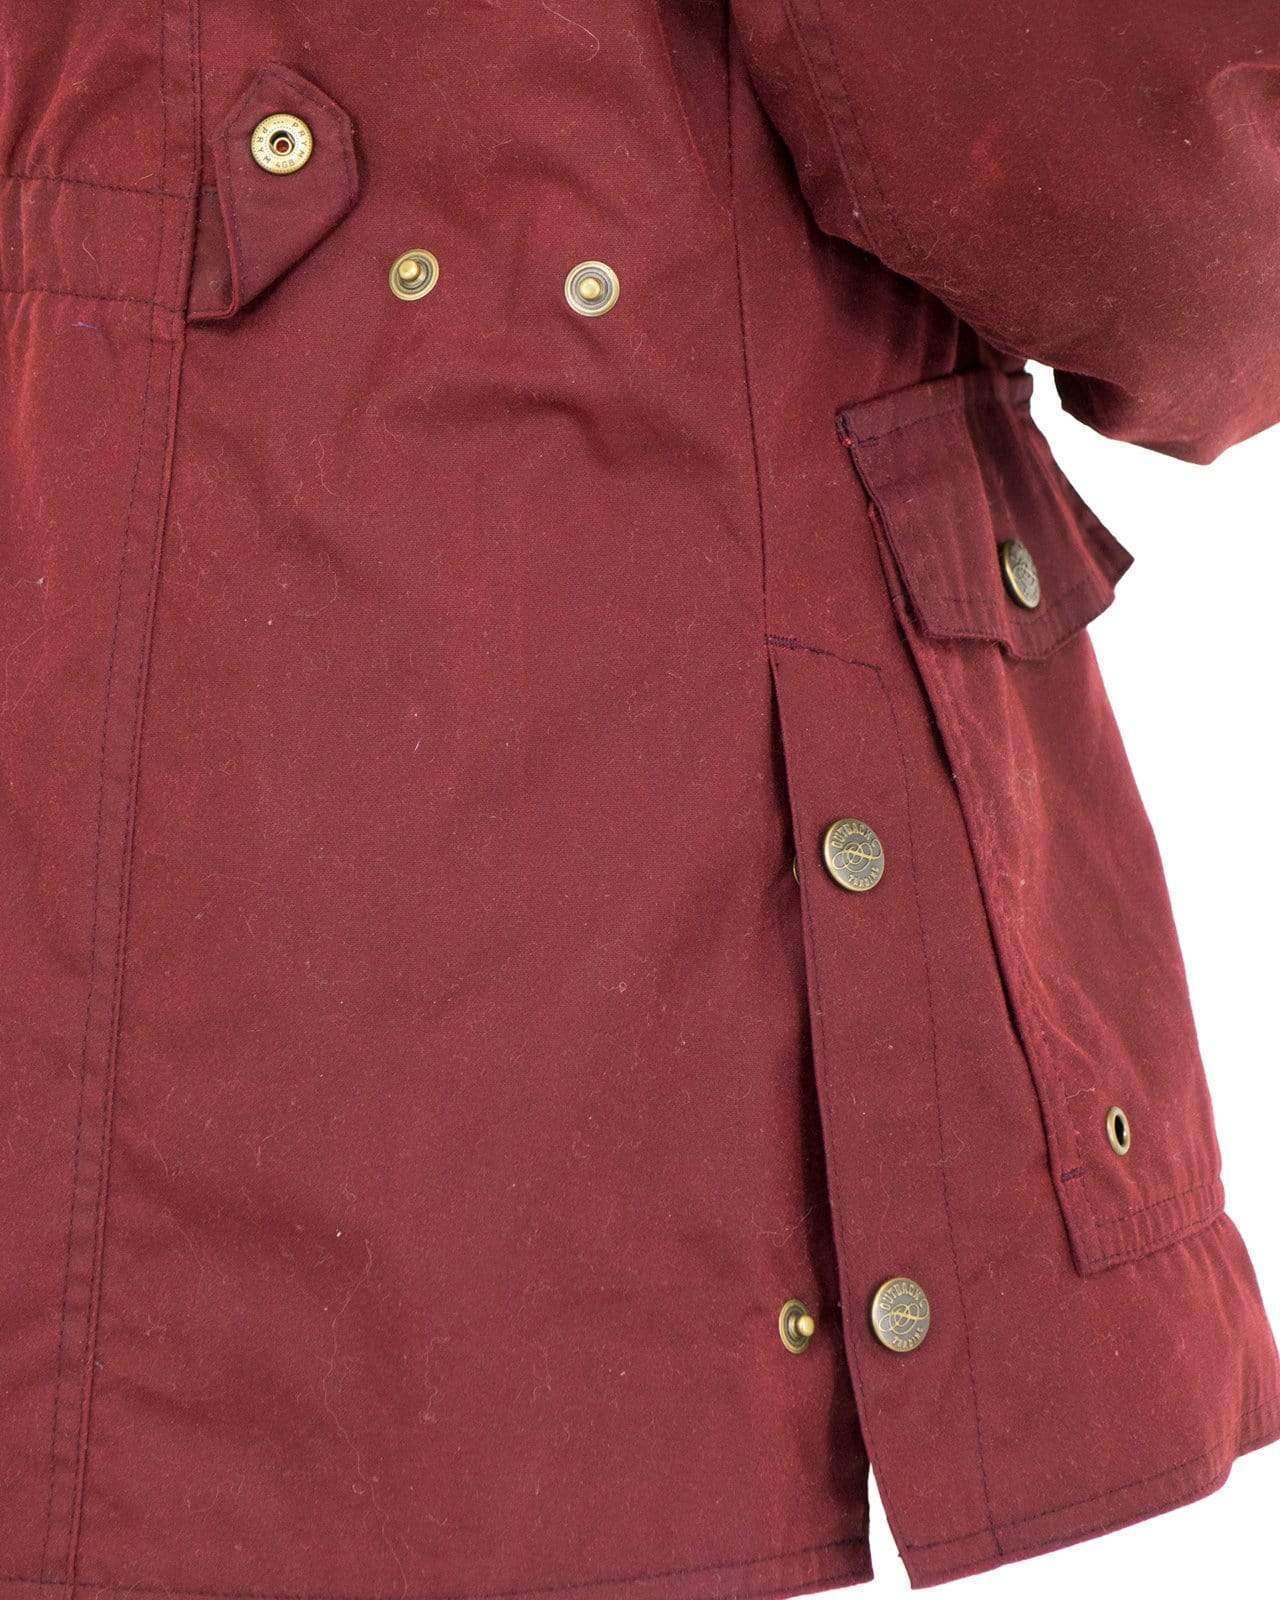 Outback Trading Company Women’s Jill-A-Roo Oilskin Jacket Coats & Jackets